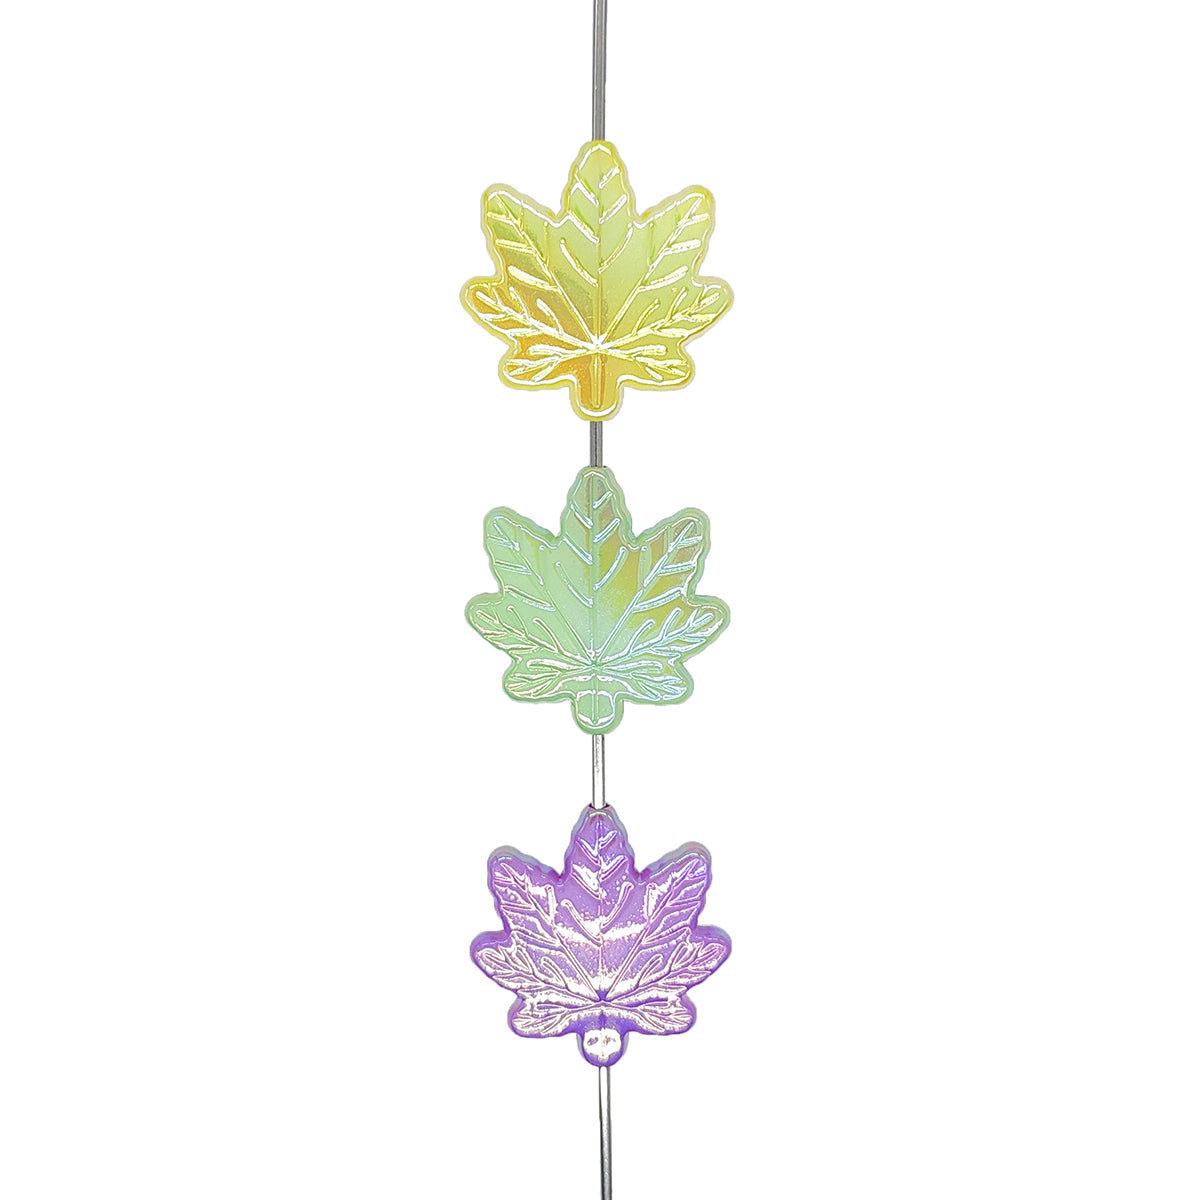 Mix Iridescent Acrylic Maple Leaf Focal Beads, Pen Beads